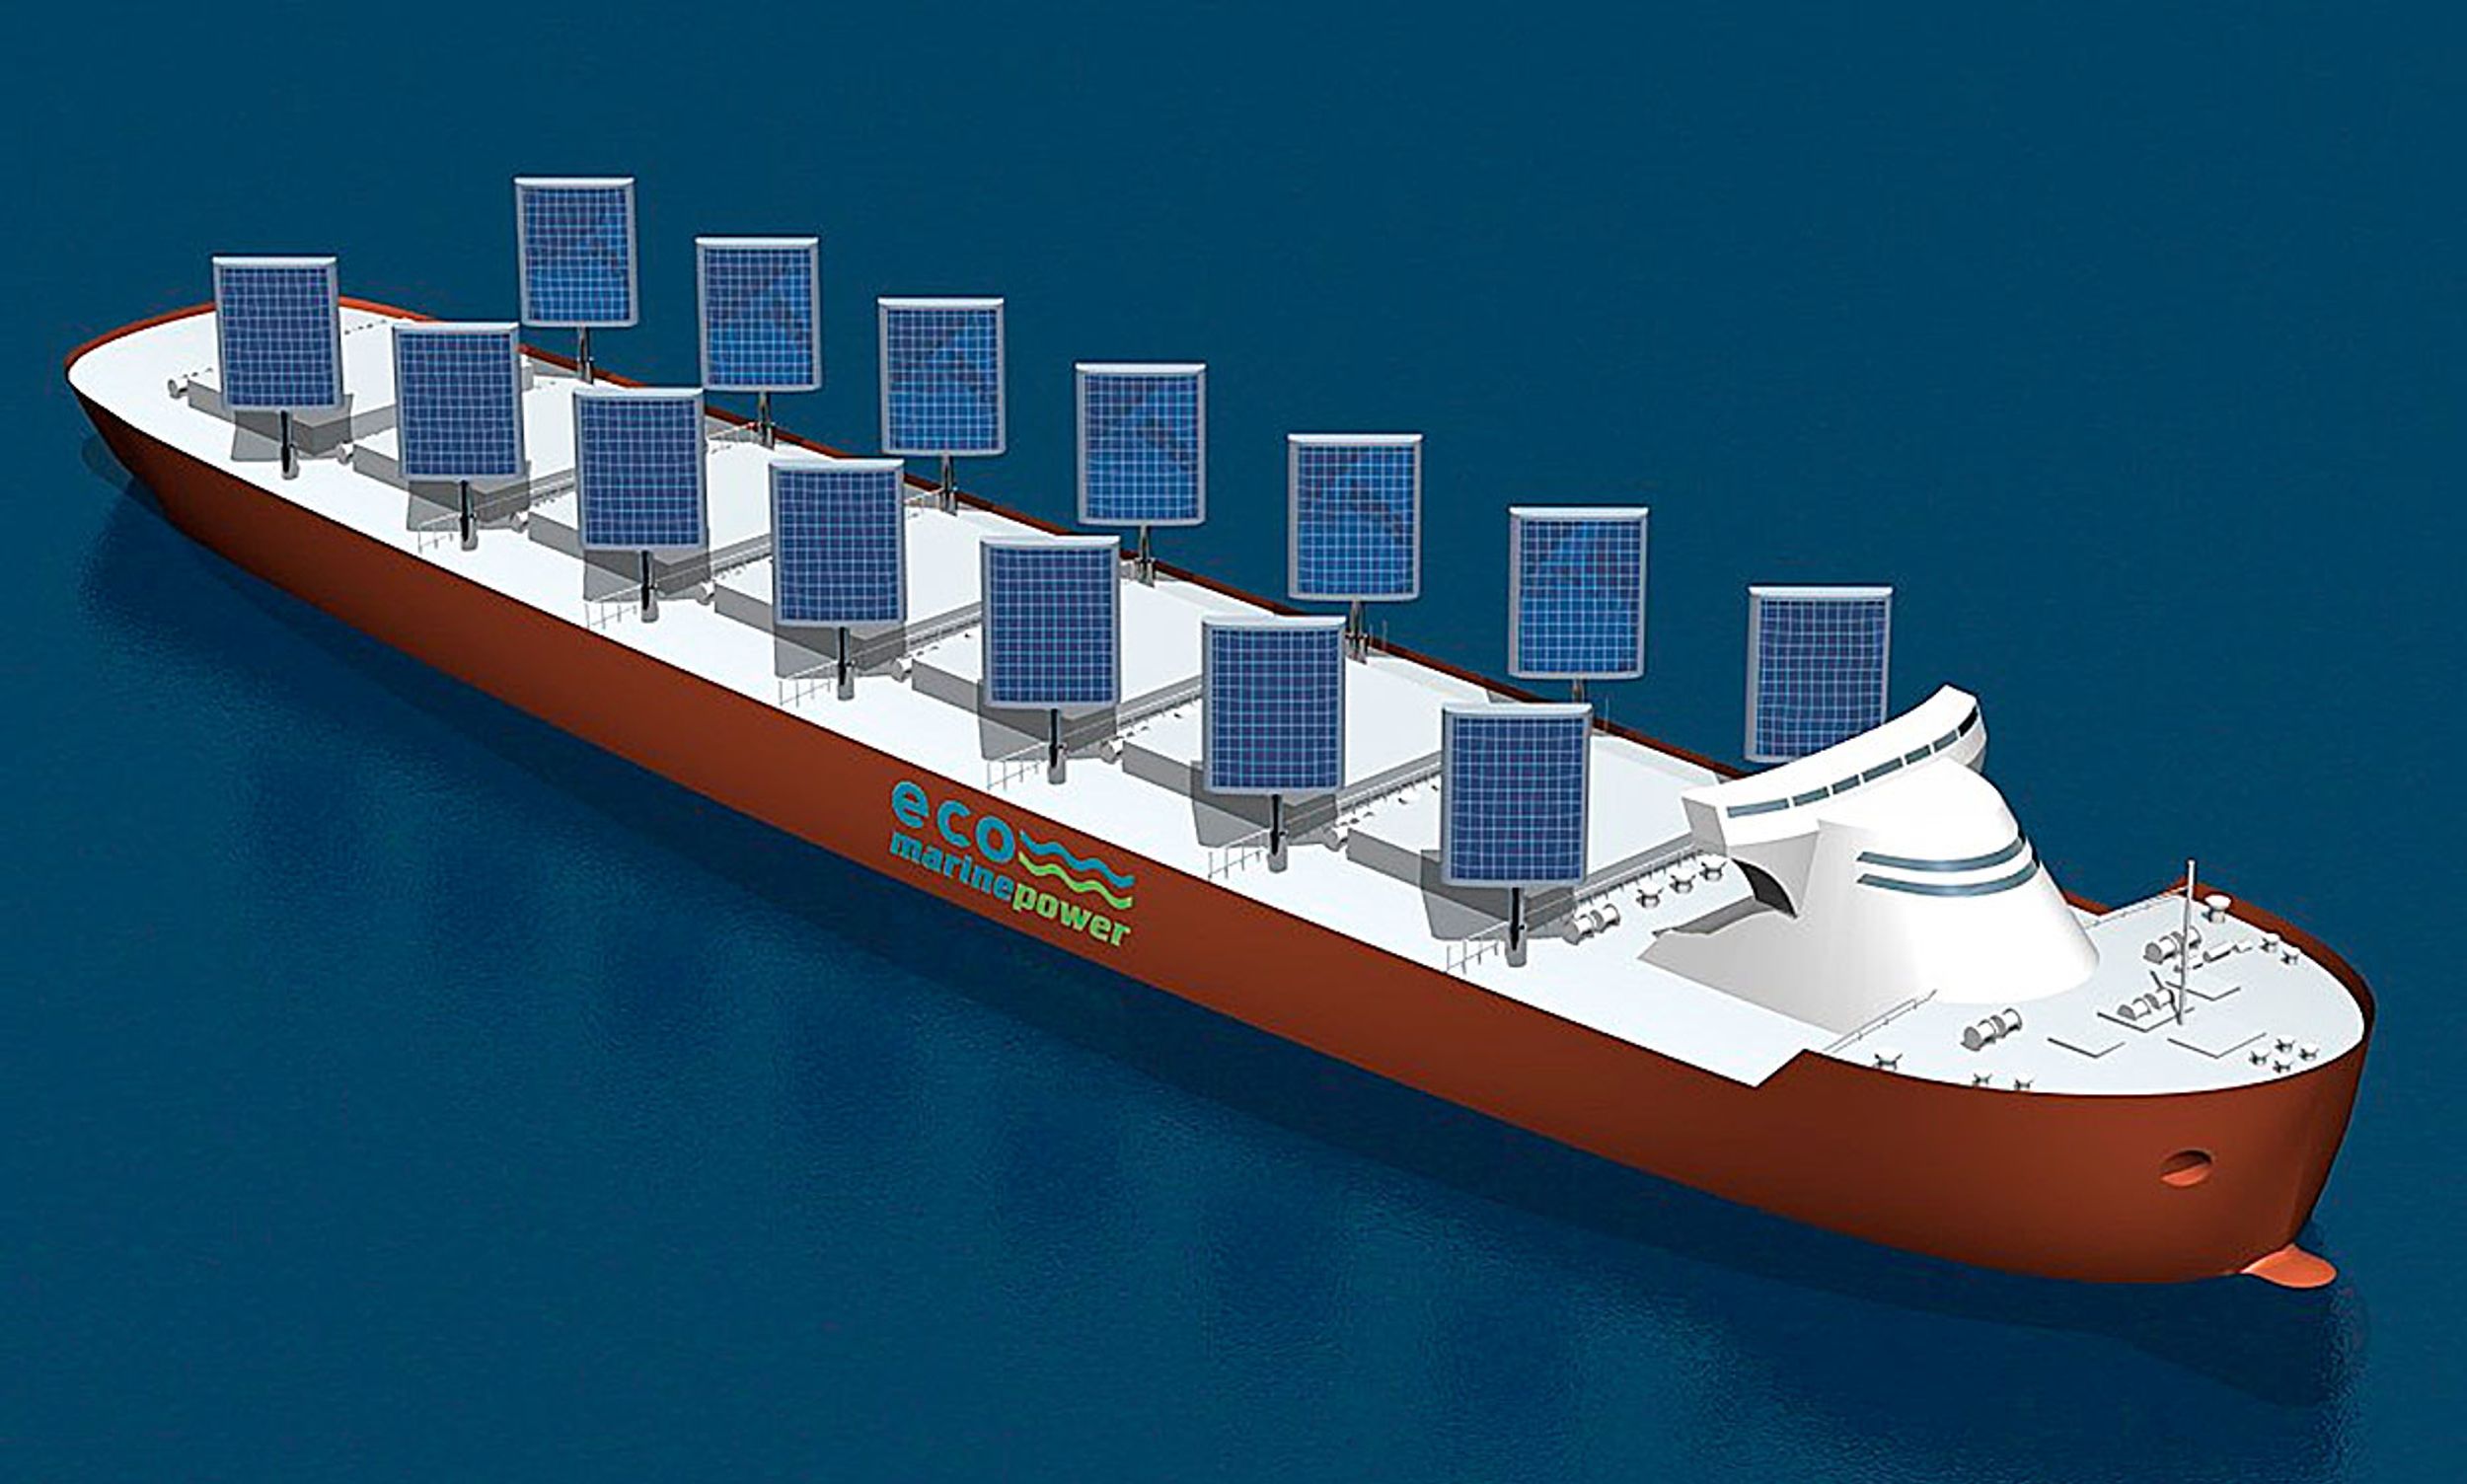 The Aquarius Eco Ship concept design includes rigid sails with solar panels to curb ships' fuel consumption.